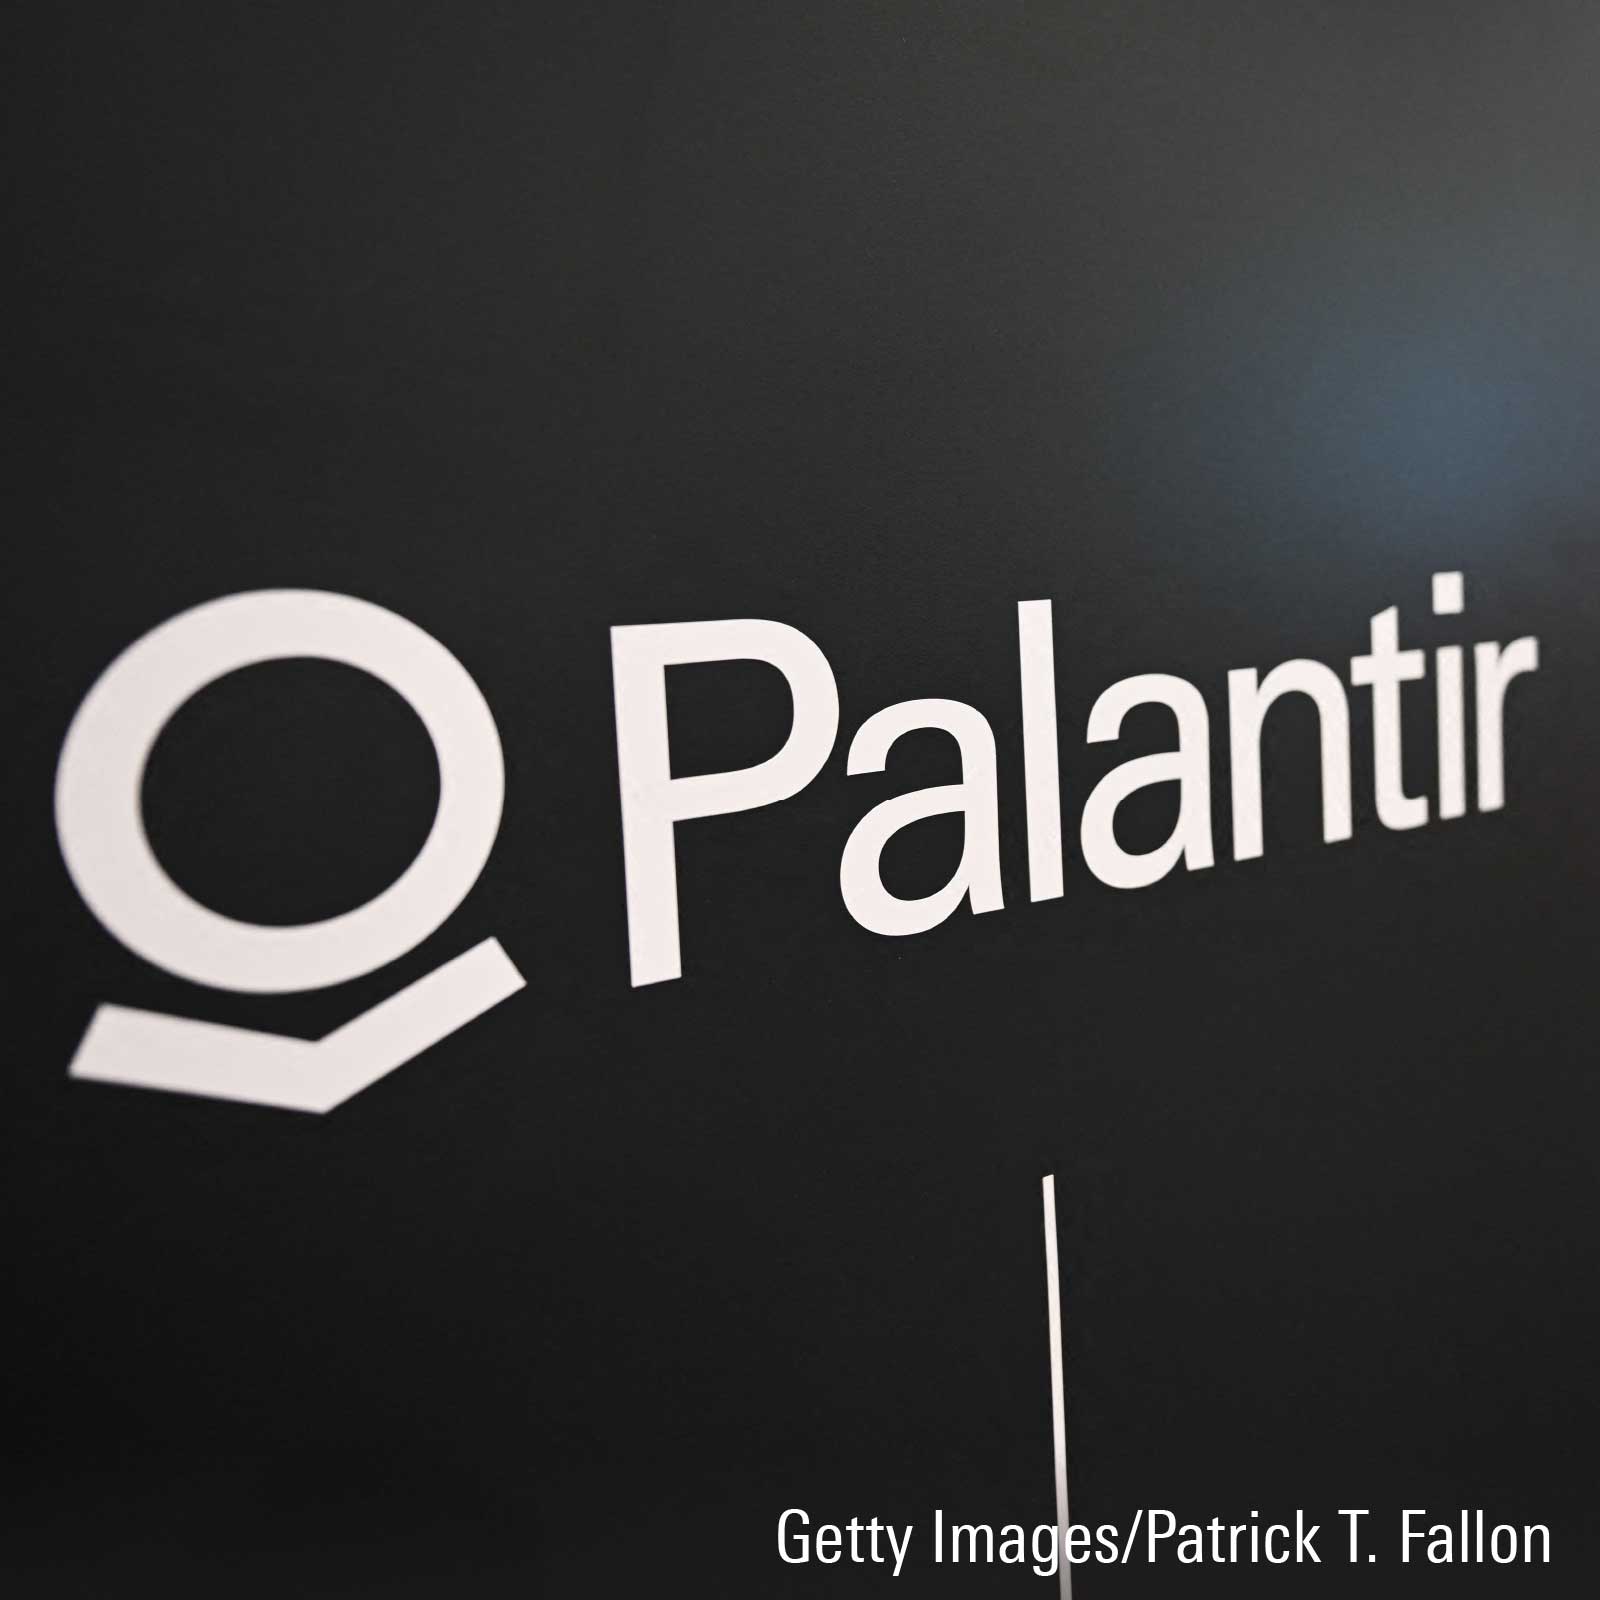 Palantir: Strong Earnings But Shares Fall